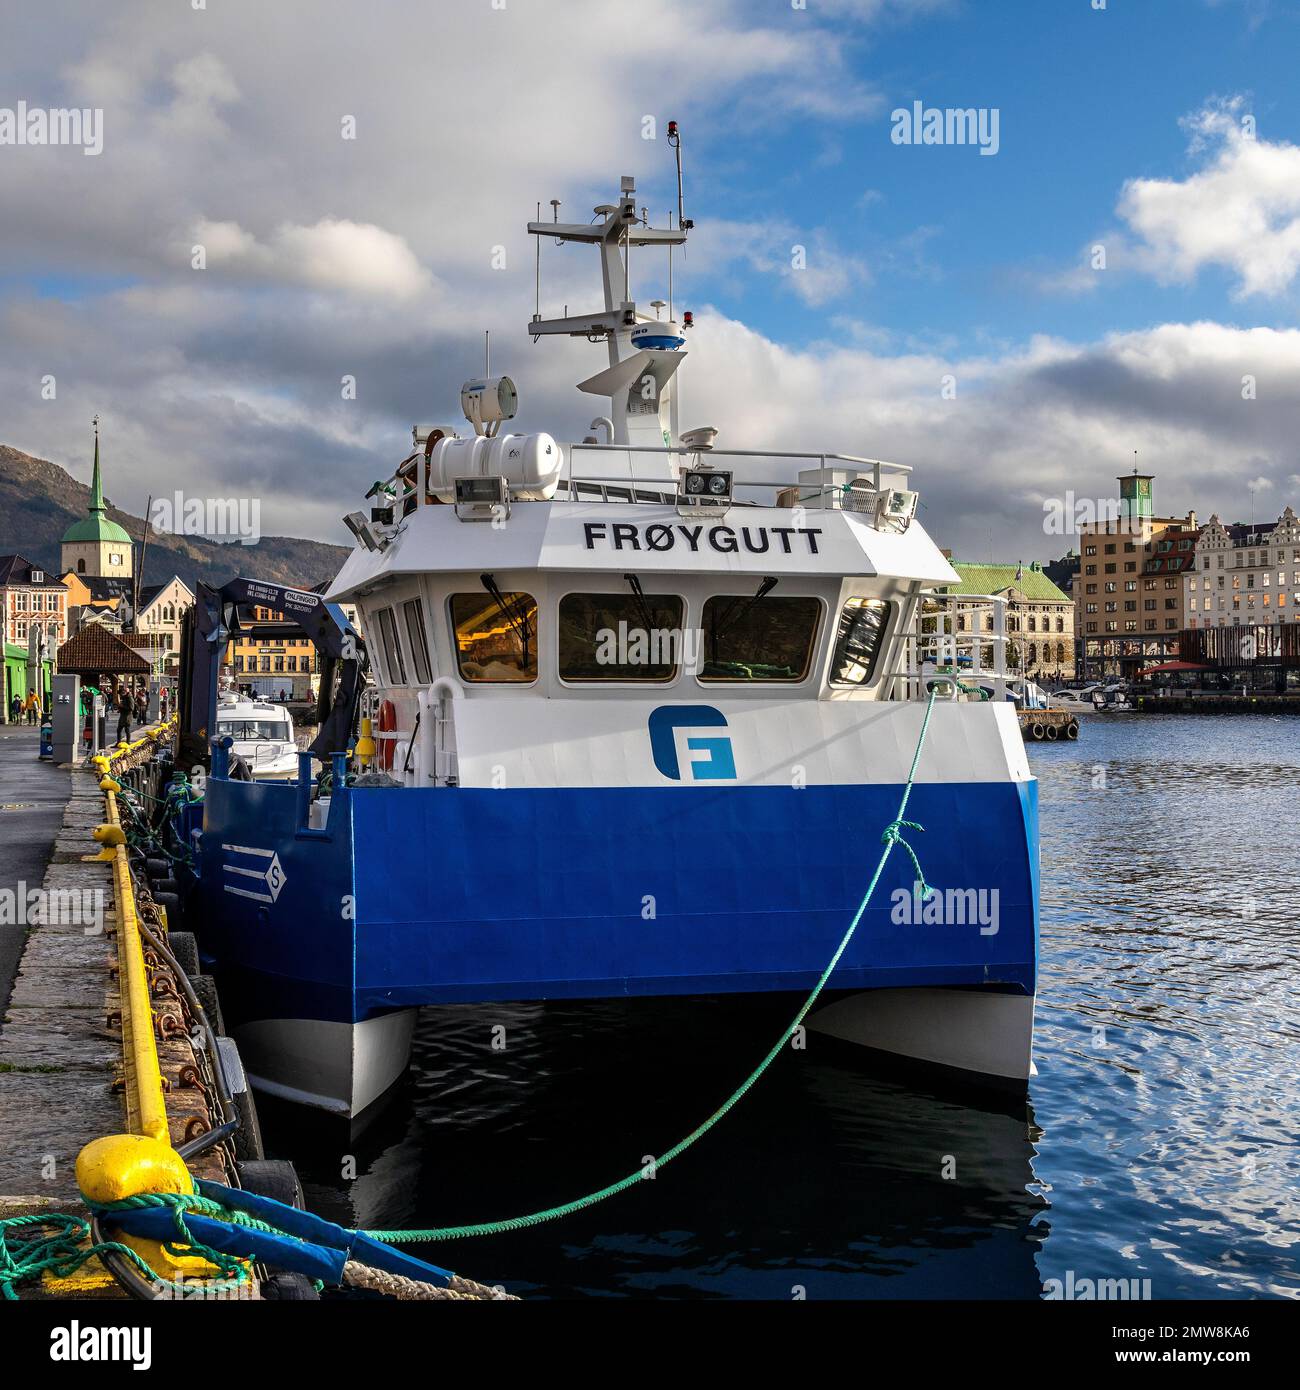 Fishing and work boat Froygutt (Frøygutt)  at Bryggen quay, in the port of Bergen, Norway. Stock Photo